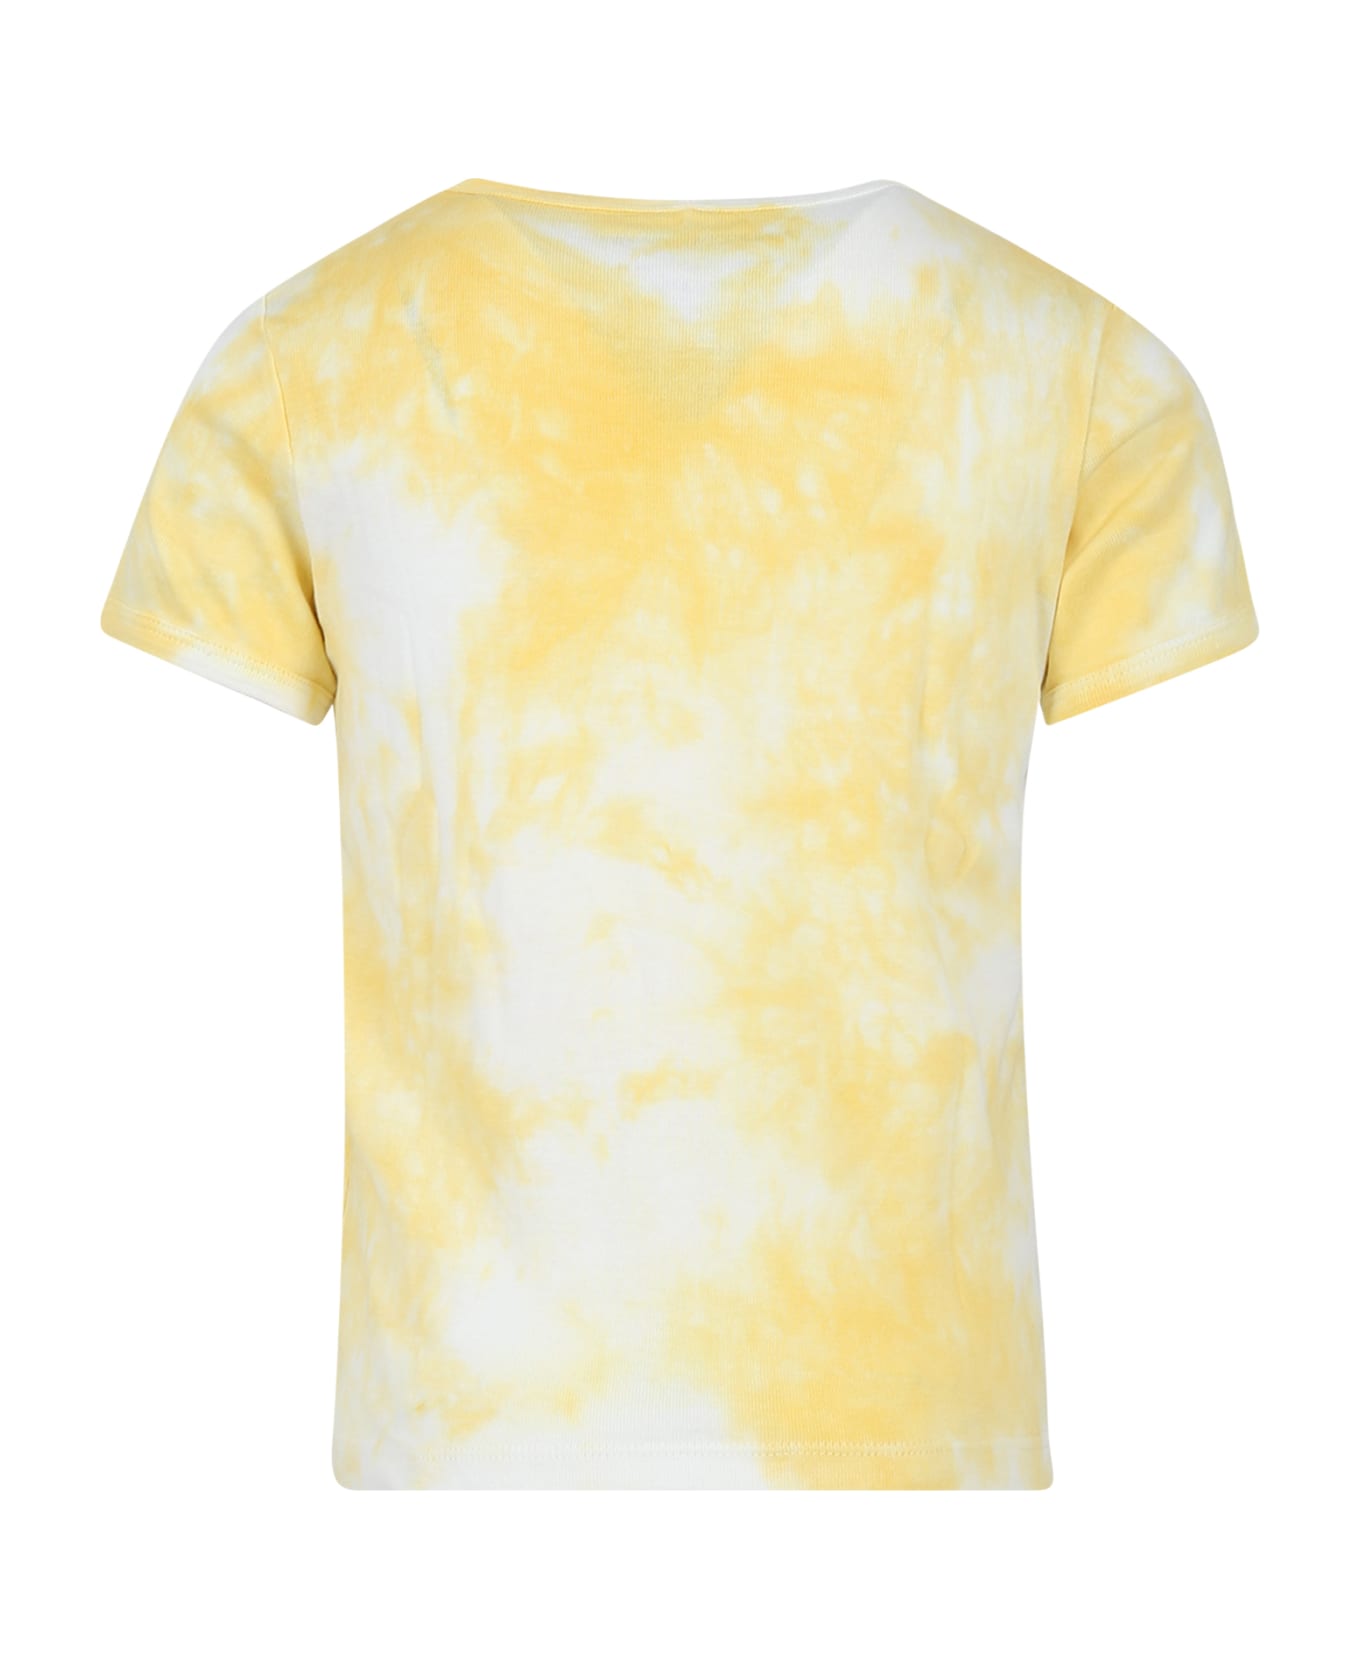 Mini Rodini Yellow T-shirt For Kids With Dove - Yellow